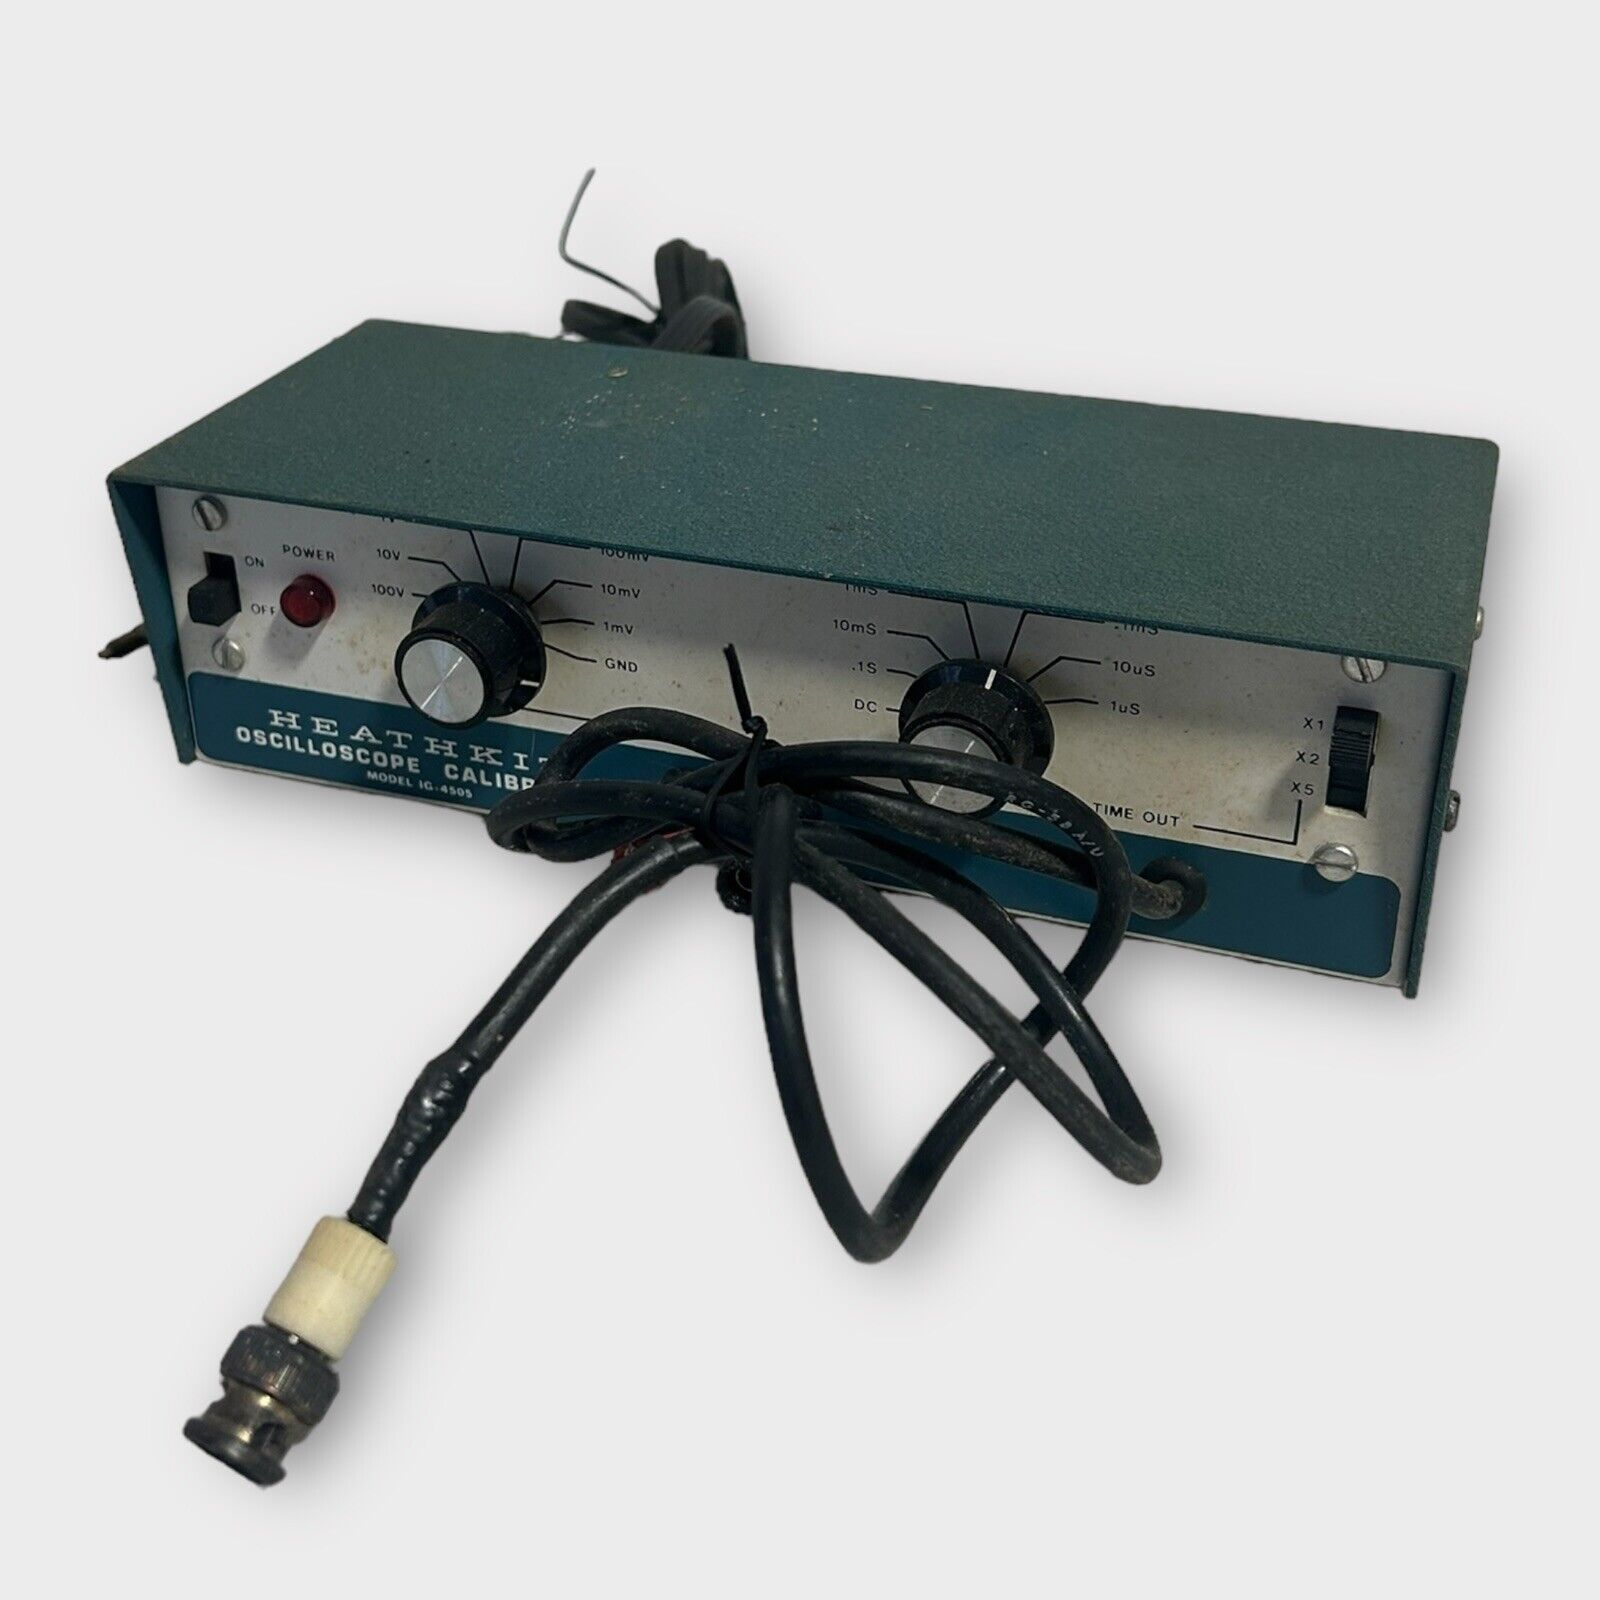 Vintage Heathkit IG-4505 Oscilloscope Calibrator - Powers On